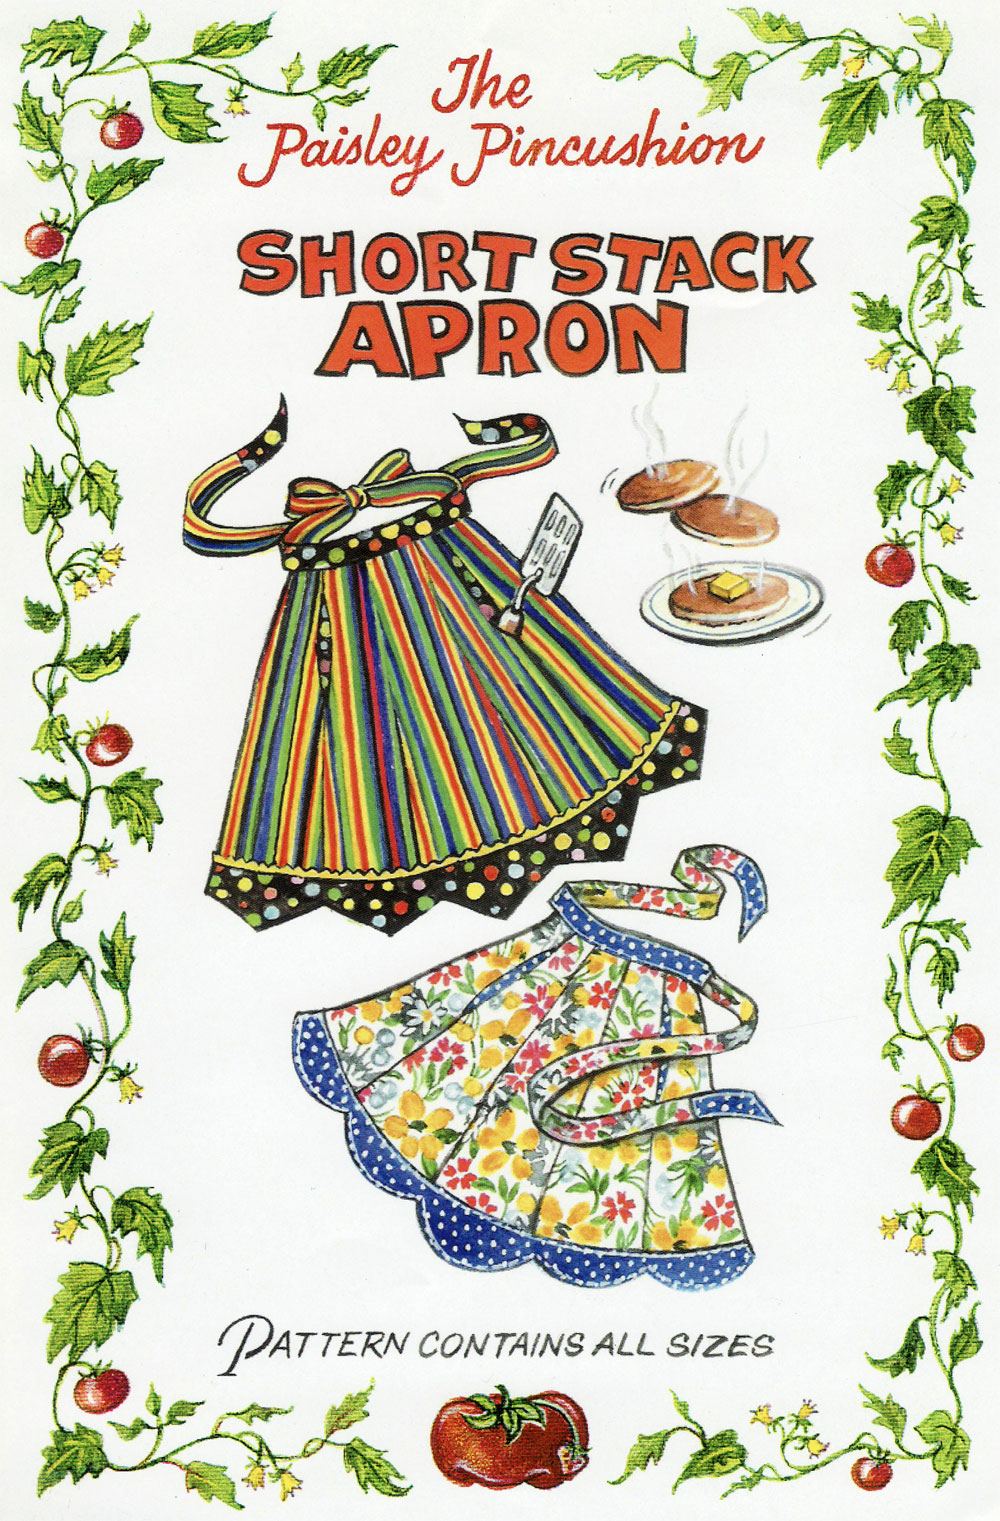 short-stack-apron-sewing-pattern-paisley-pincushion-front